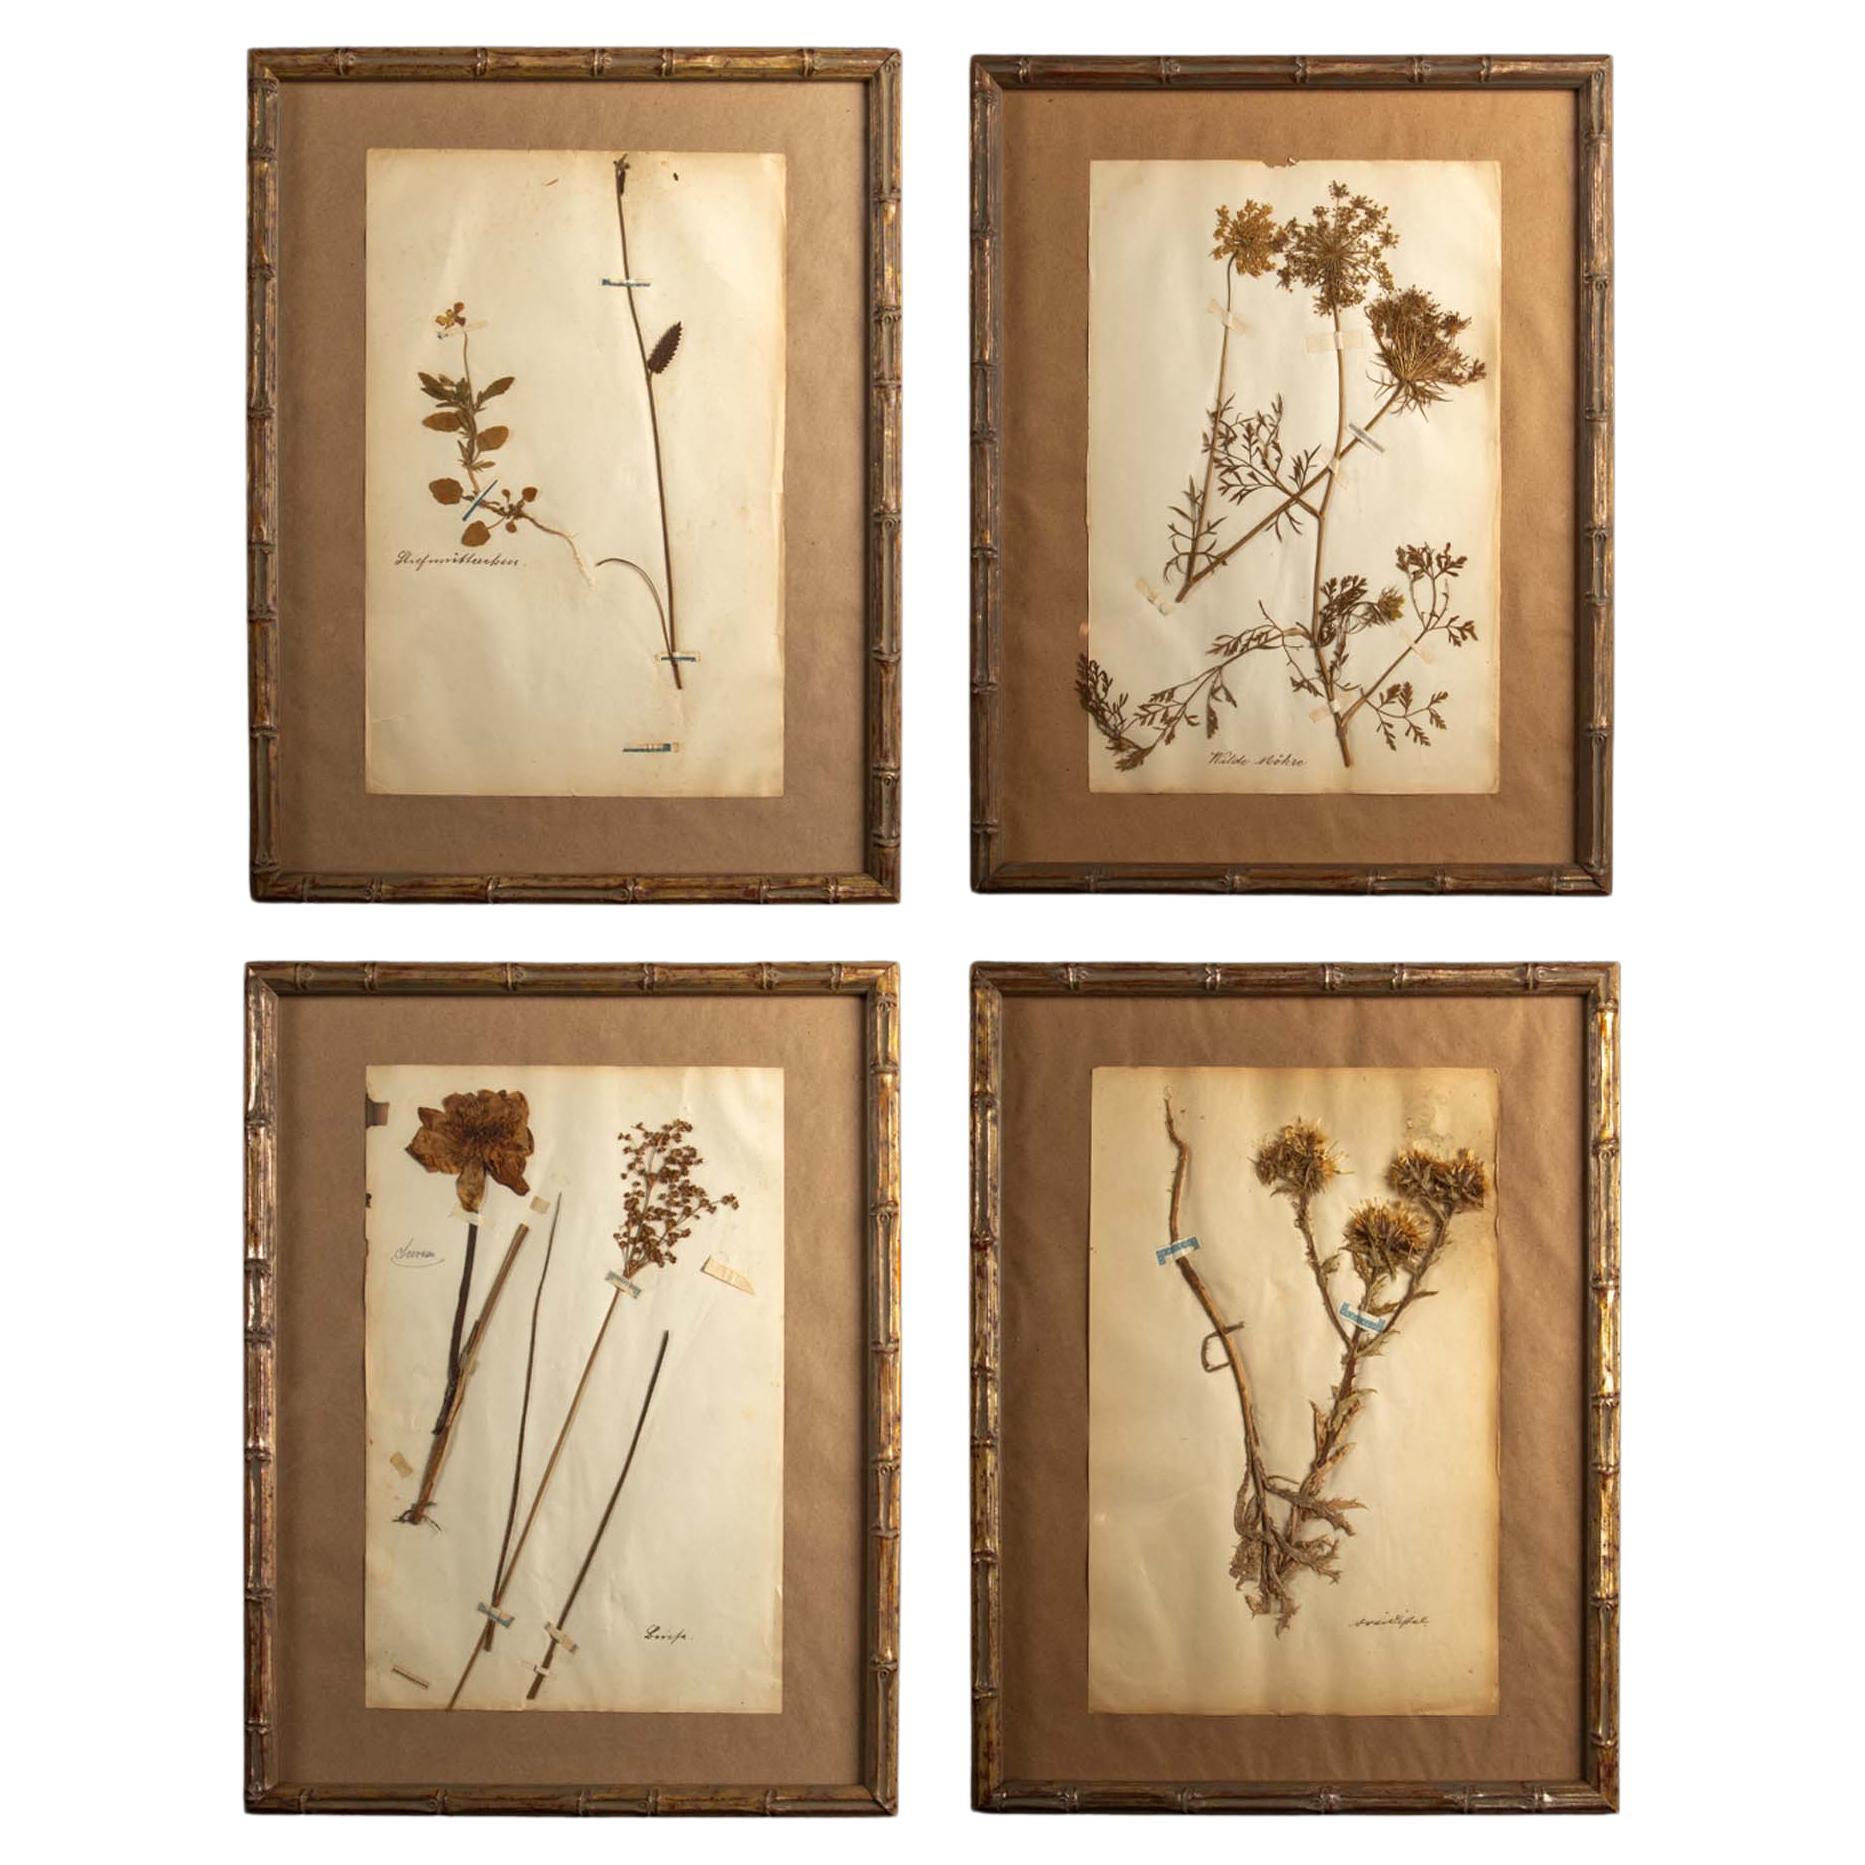 Gilt Framed Herbier Botanical Specimens from the 19th Century For Sale